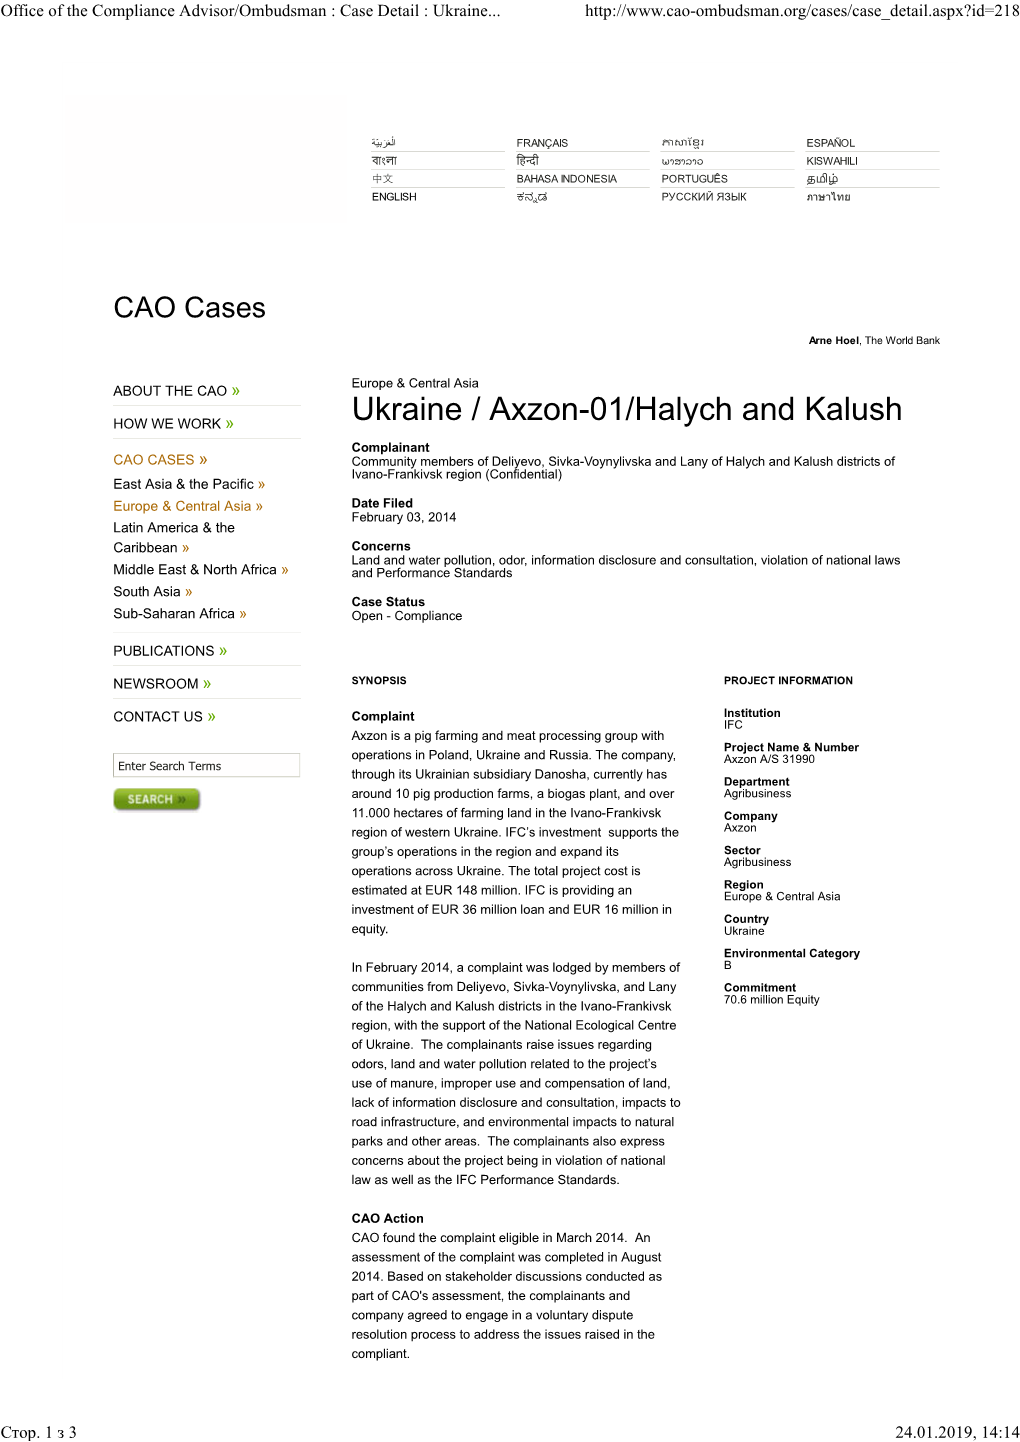 Ukraine / Axzon-01/Halych and Kalush